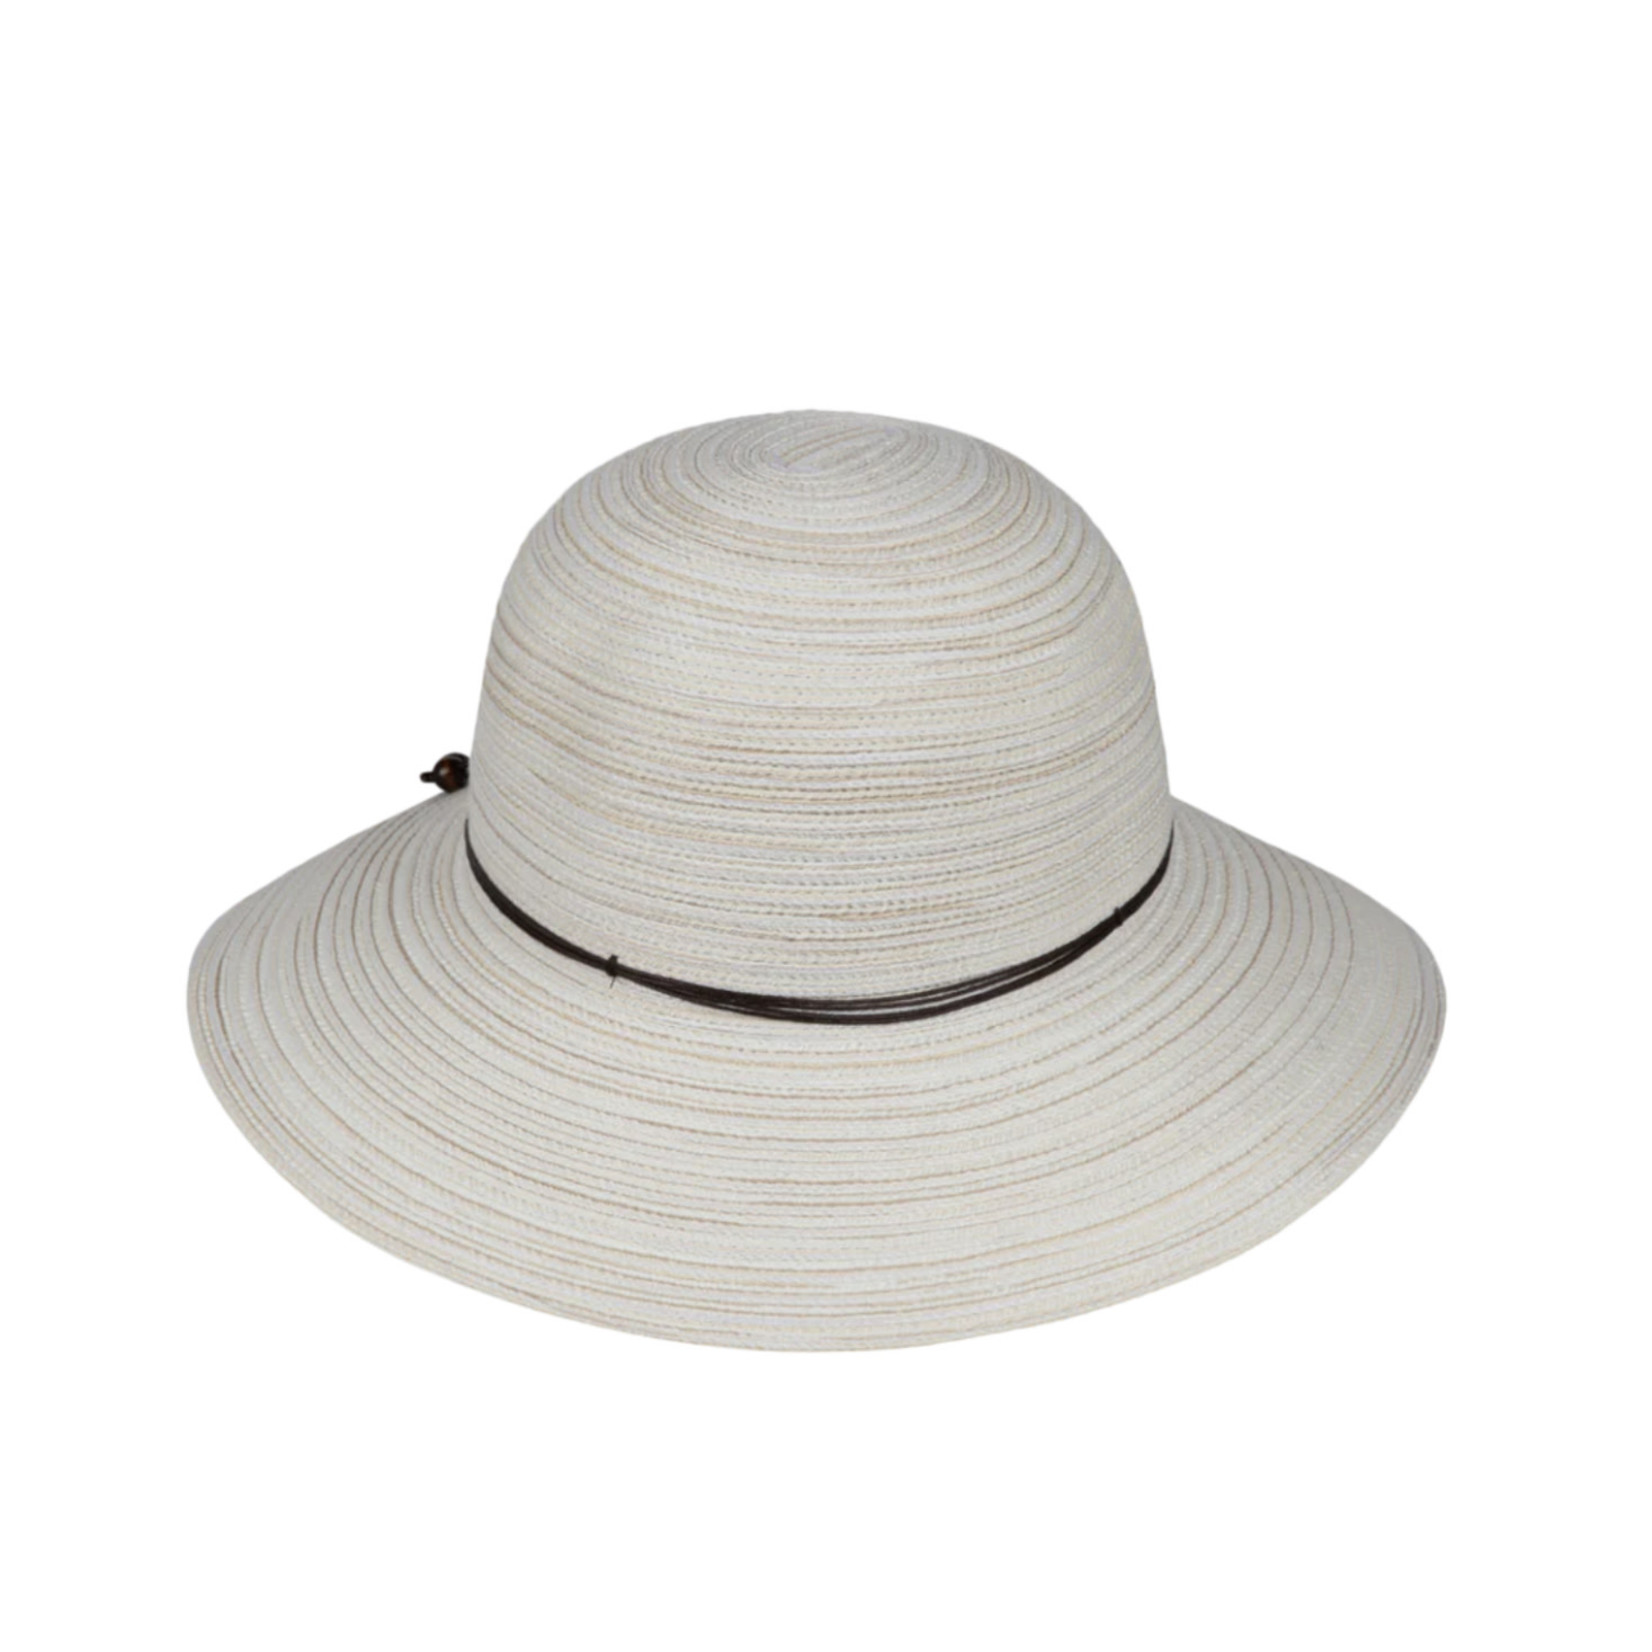 Kooringal Sophia Short Brim Hat in White